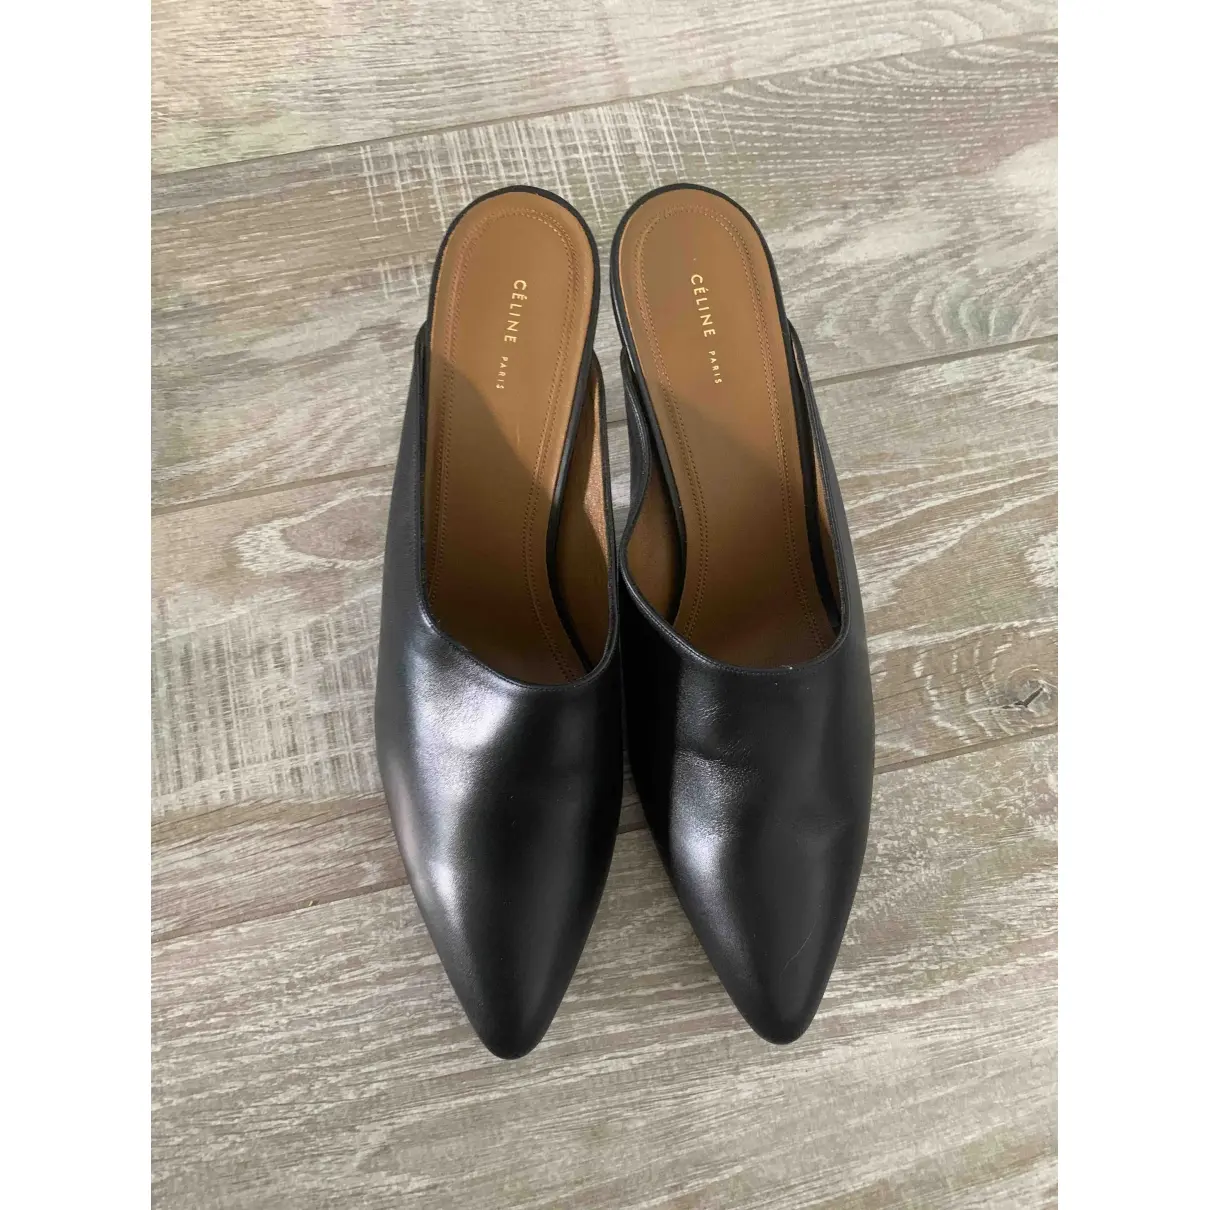 Celine Leather heels for sale